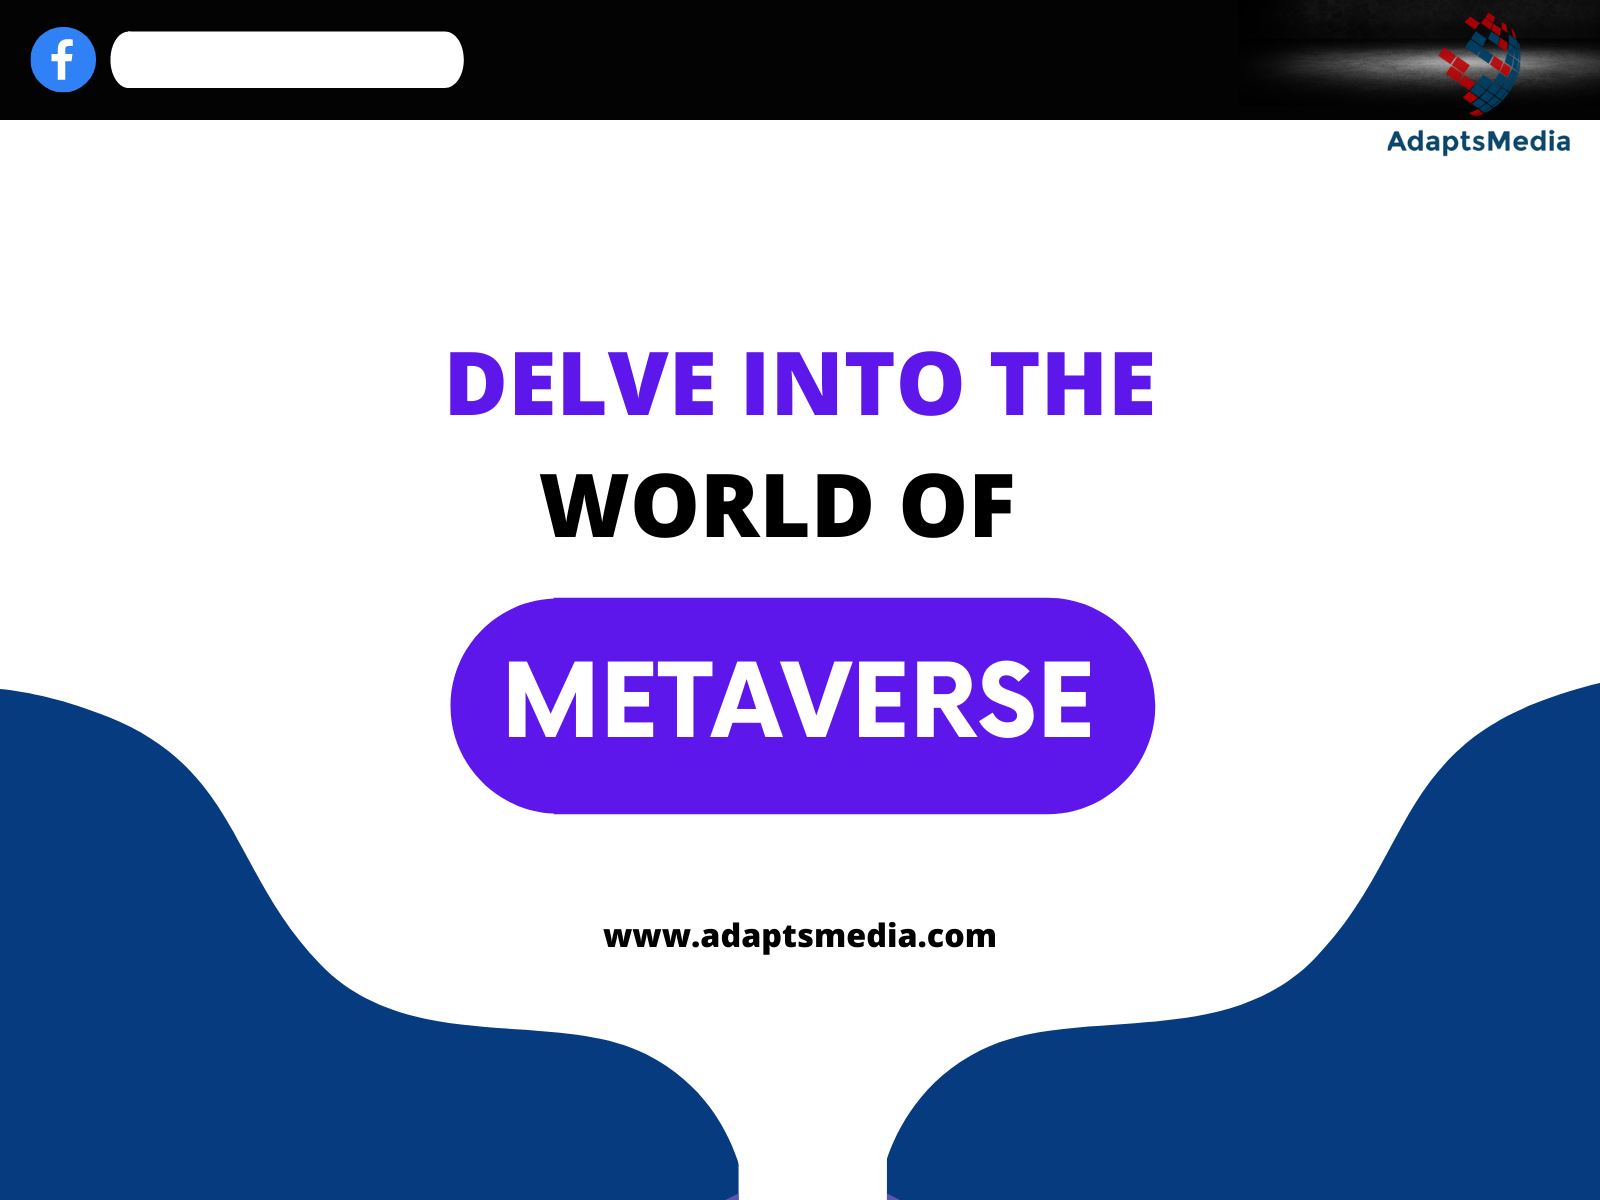 Metaverse is a virtual world